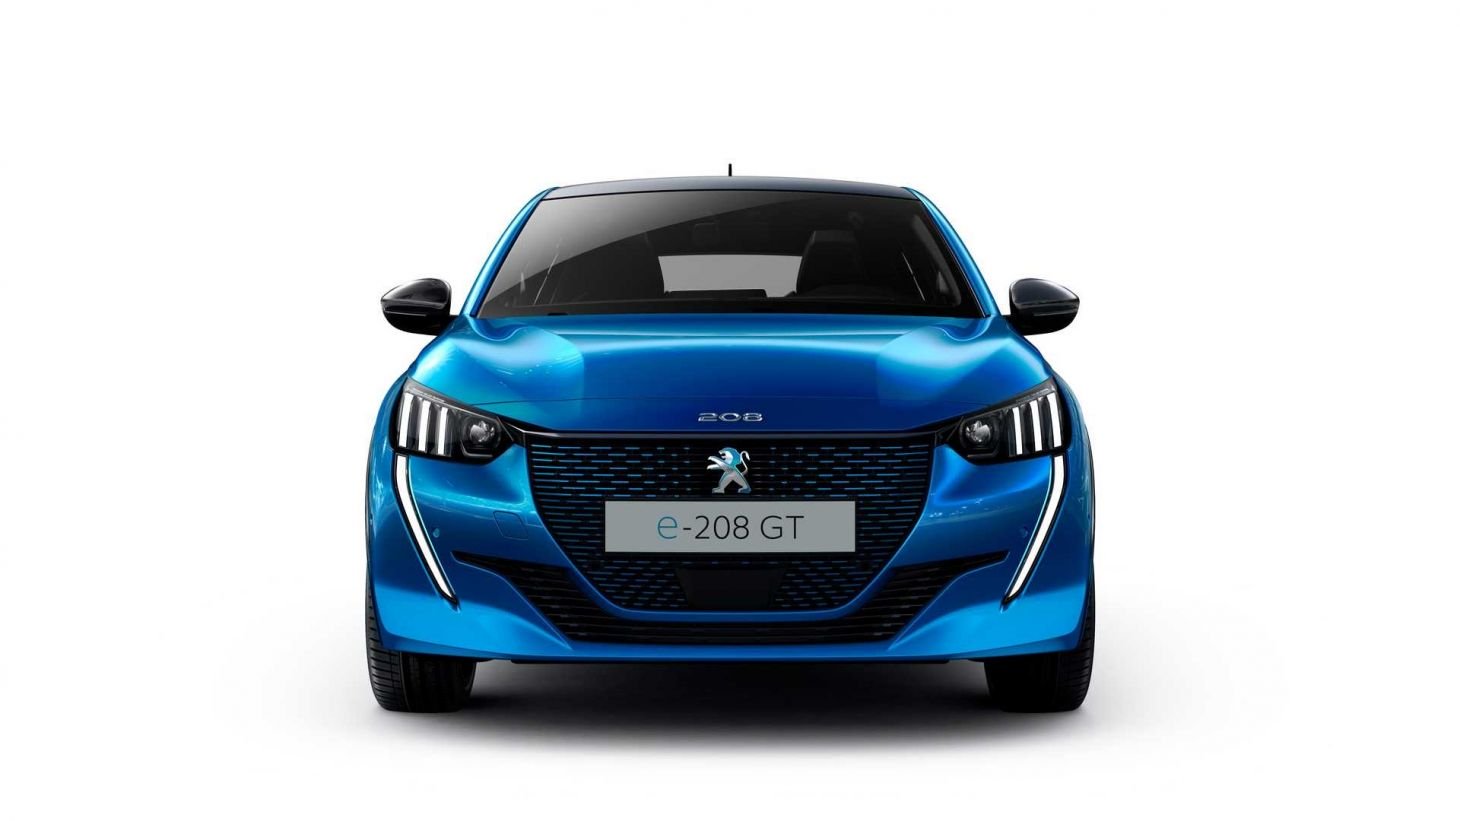 Novo Peugeot e-208 elétrico na cor azul visto de frente